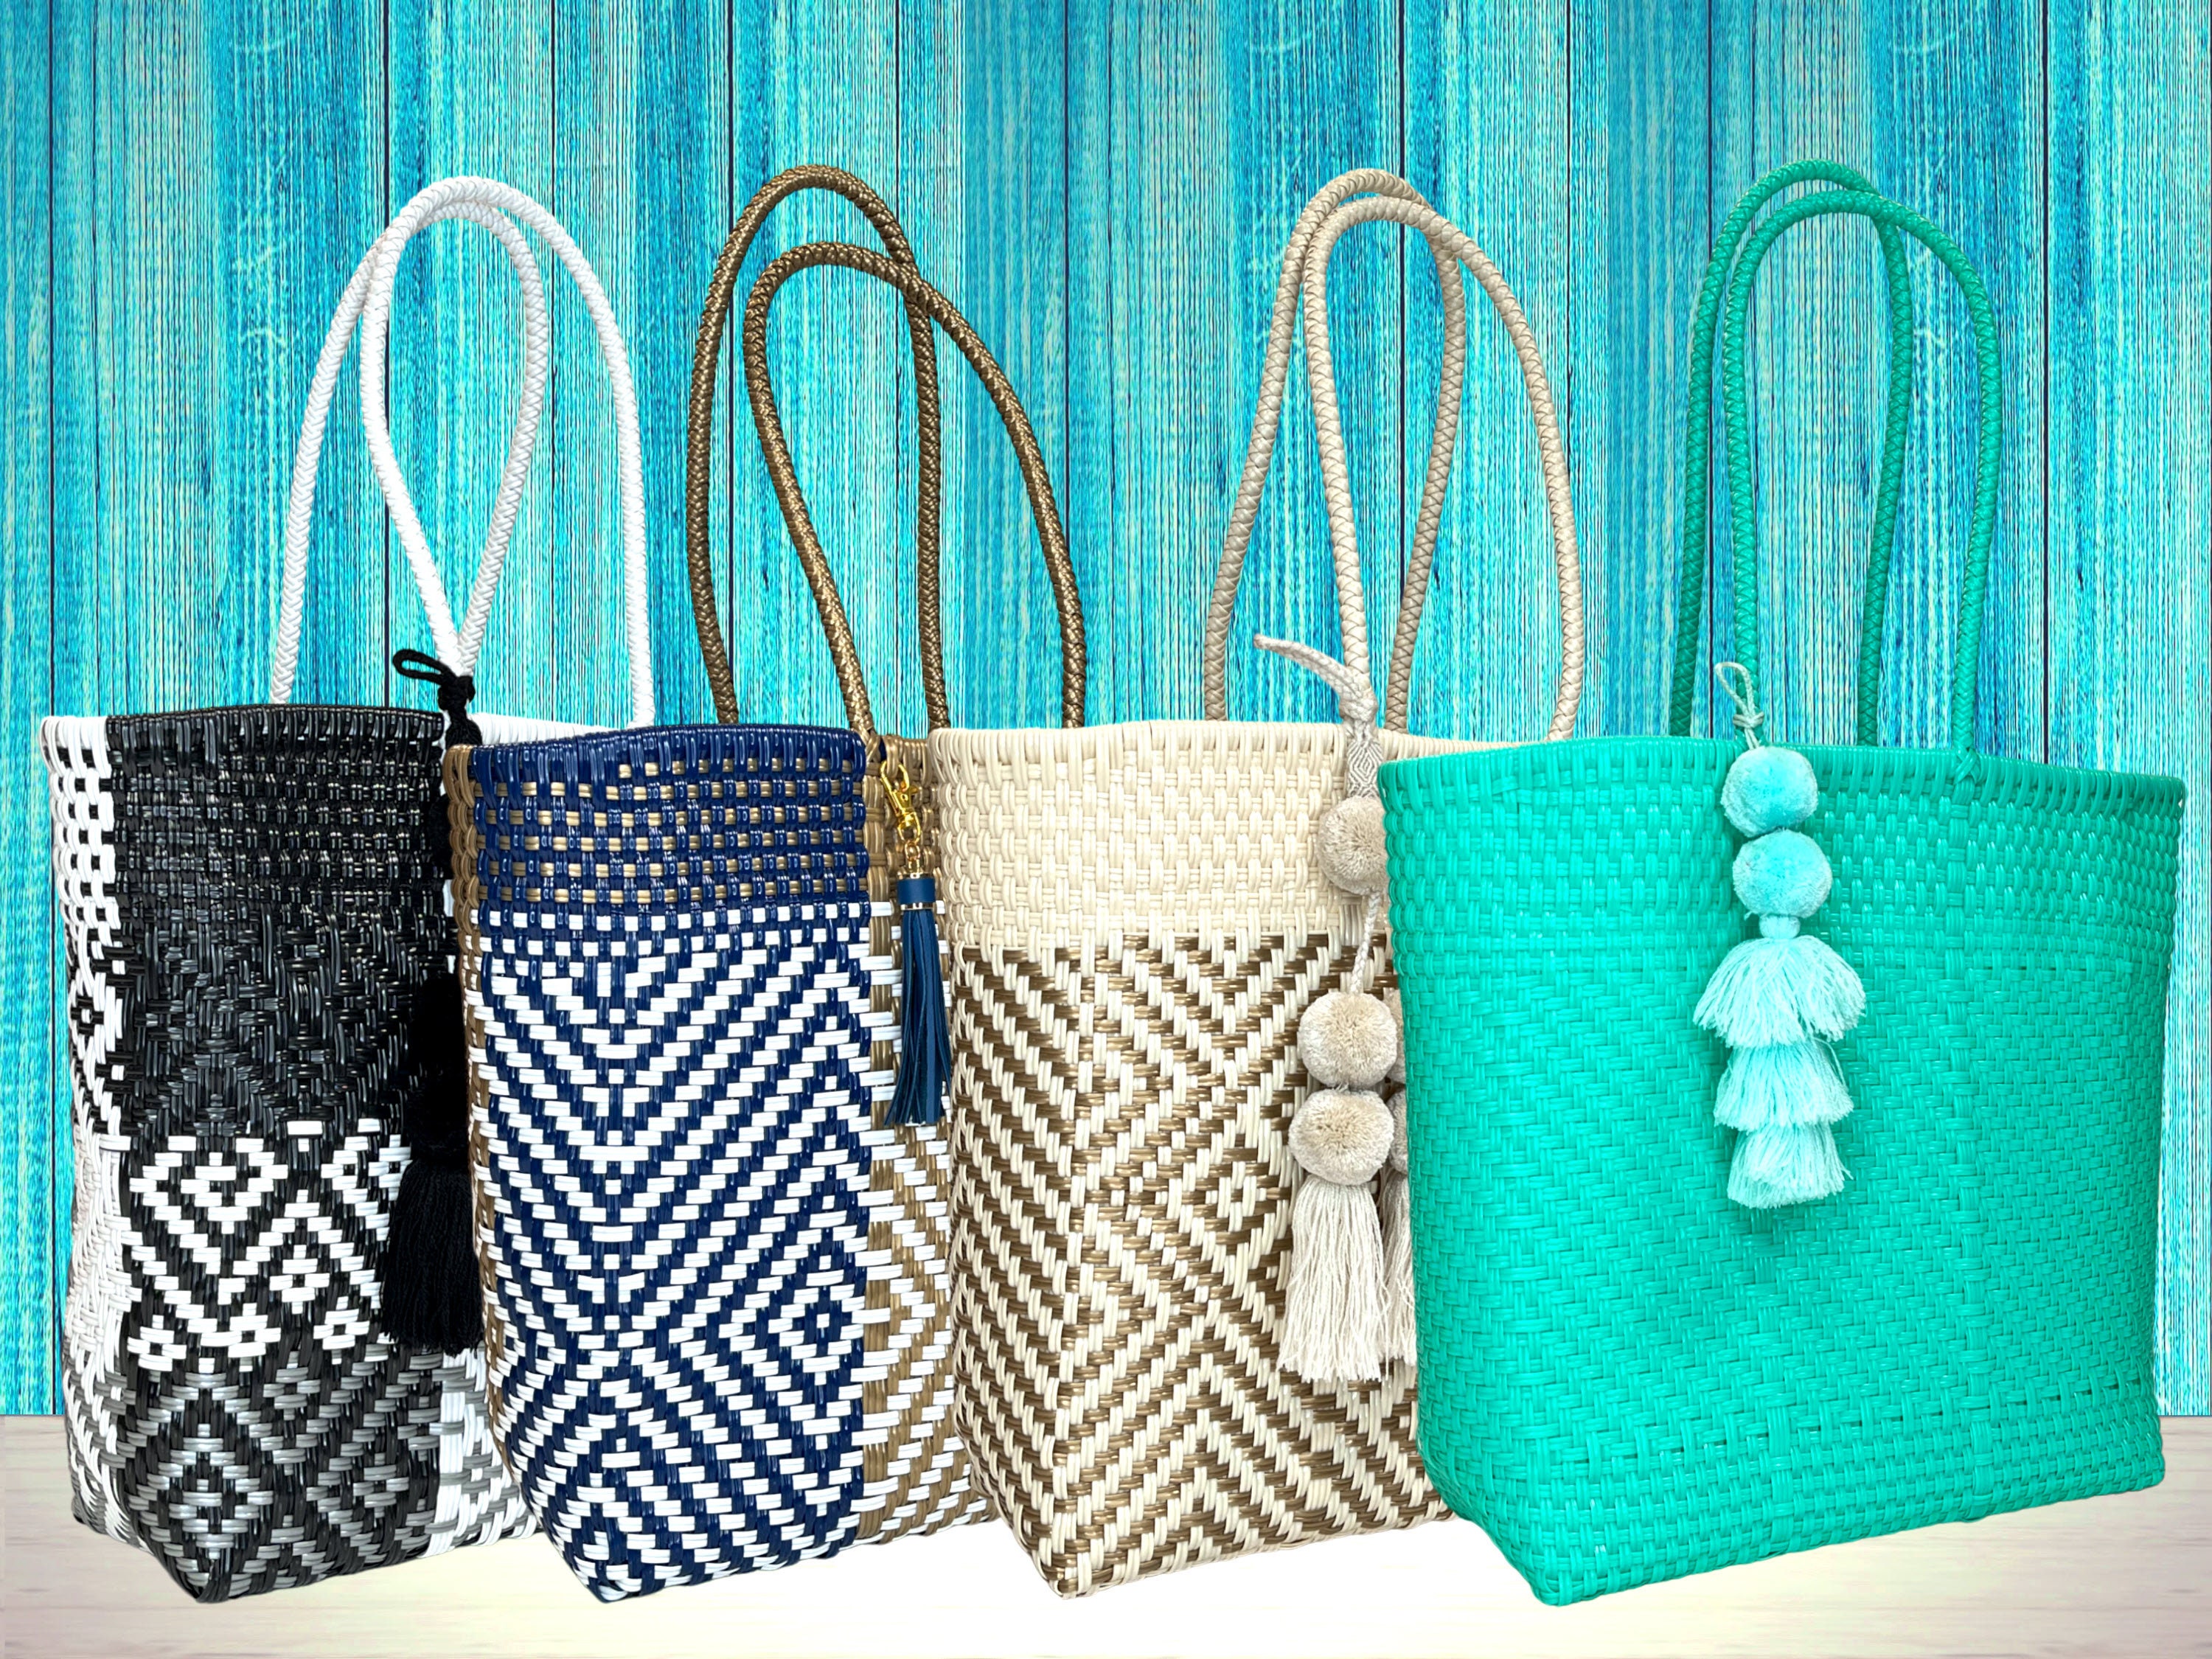 Fashionable Tote Bag, Handmade woven bag, Recycled Plastic, To-Go Bag,  Beach Bag, Market Bag, Chic, Colorful Tote, Large Tote, BRISLA BAG,  Eccentric